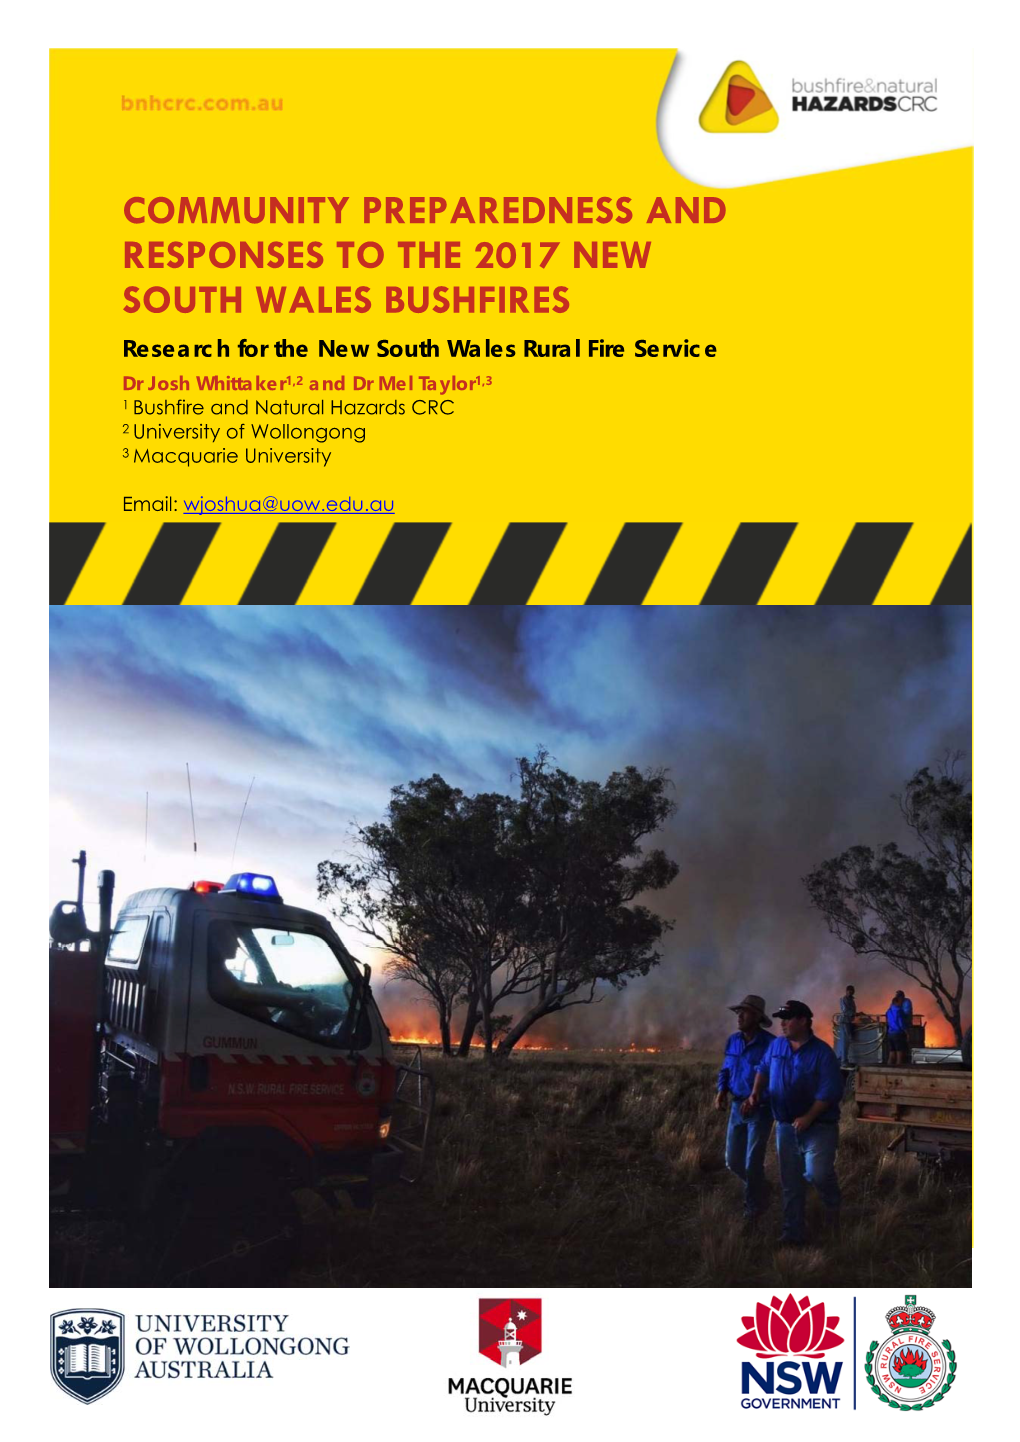 Community Preparedness and Responses to 2017 NSW